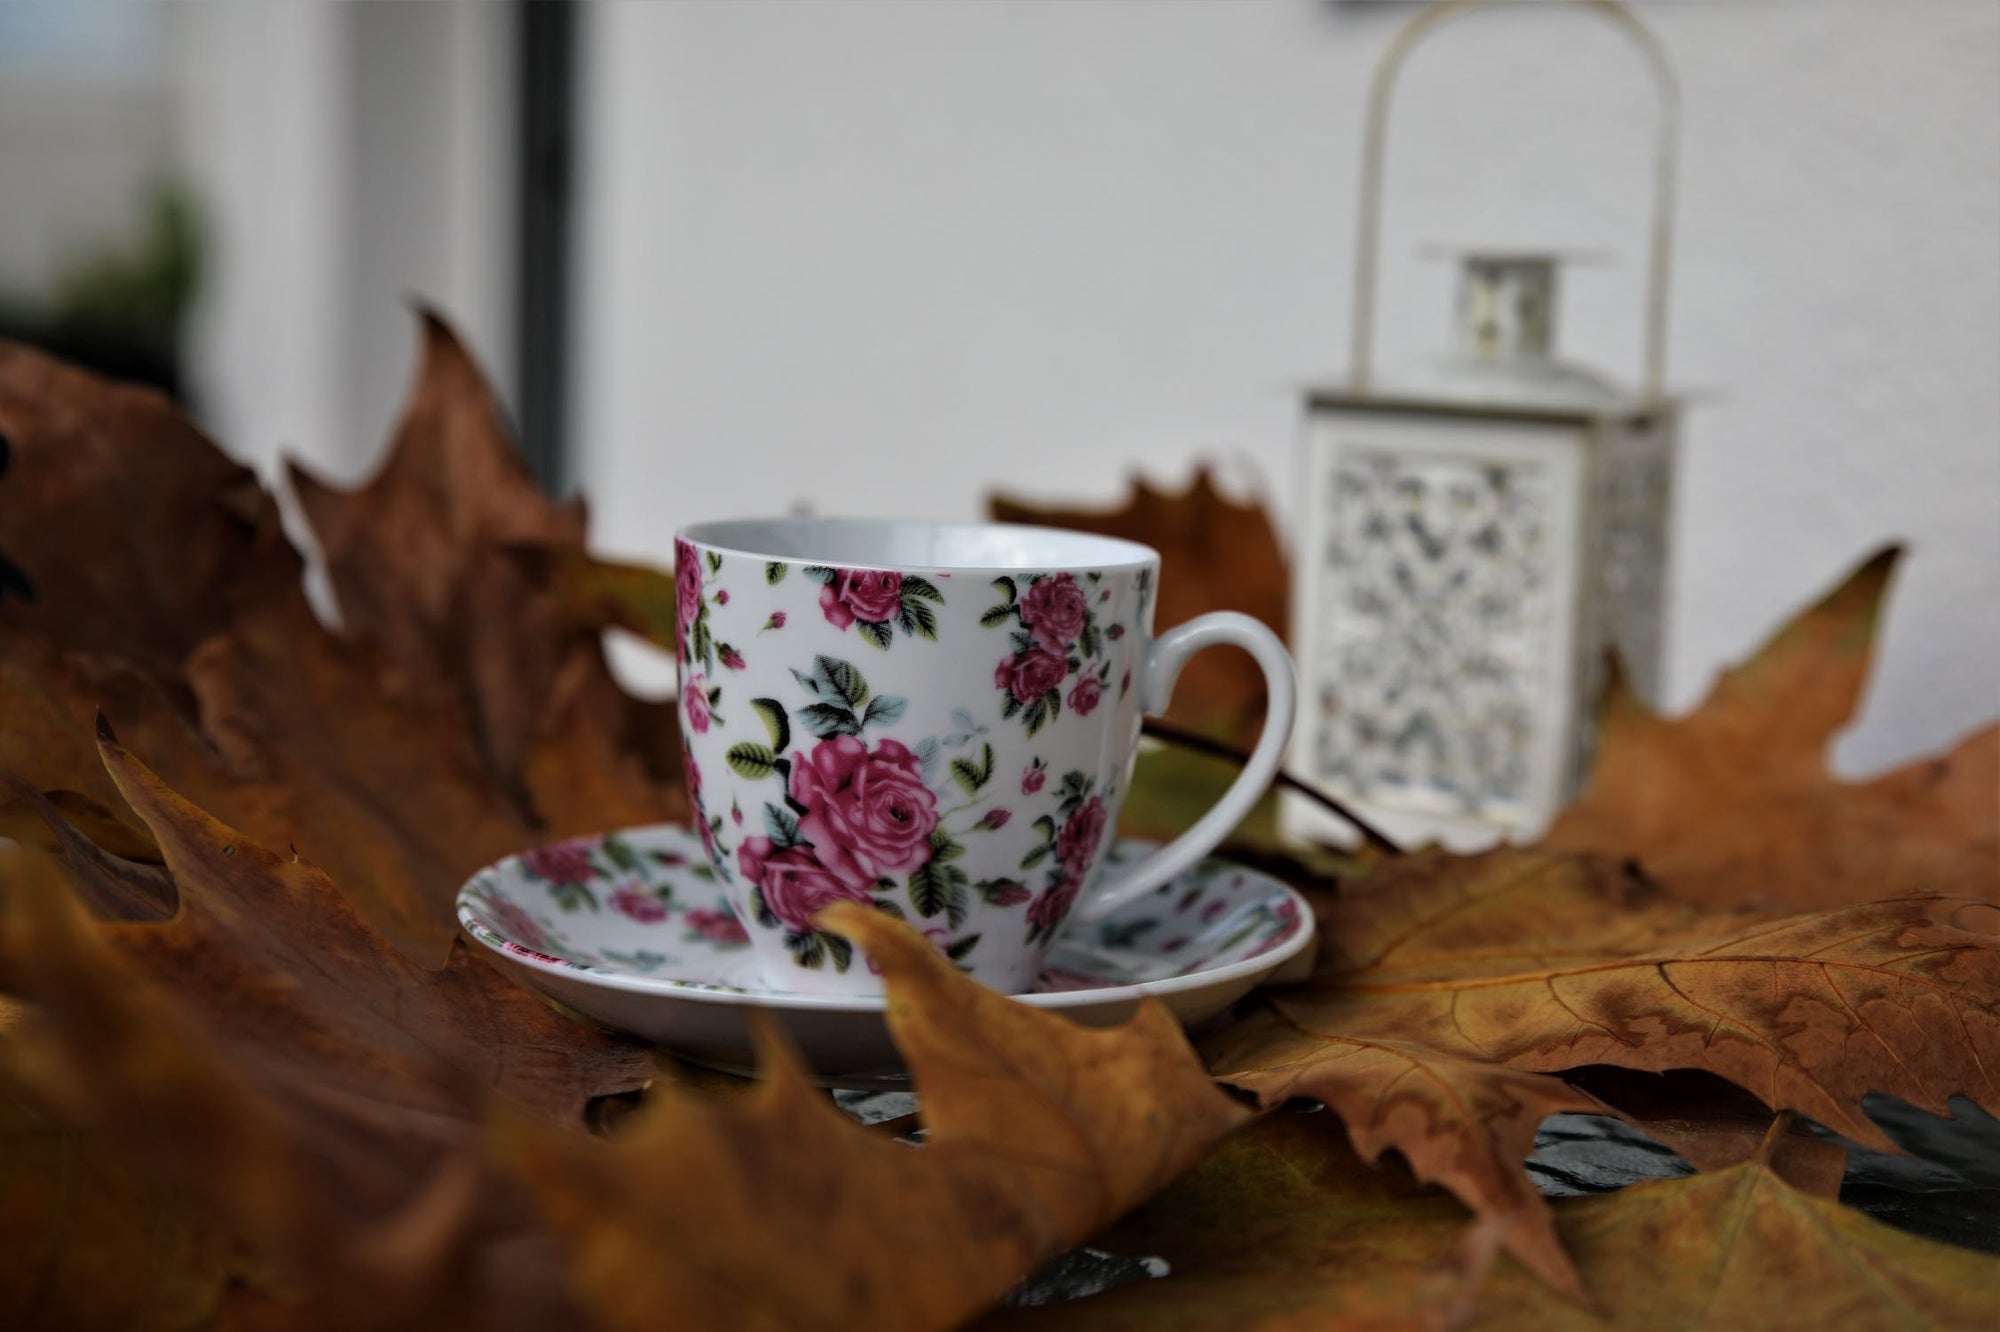 Autumn leaves... and autumn teas!